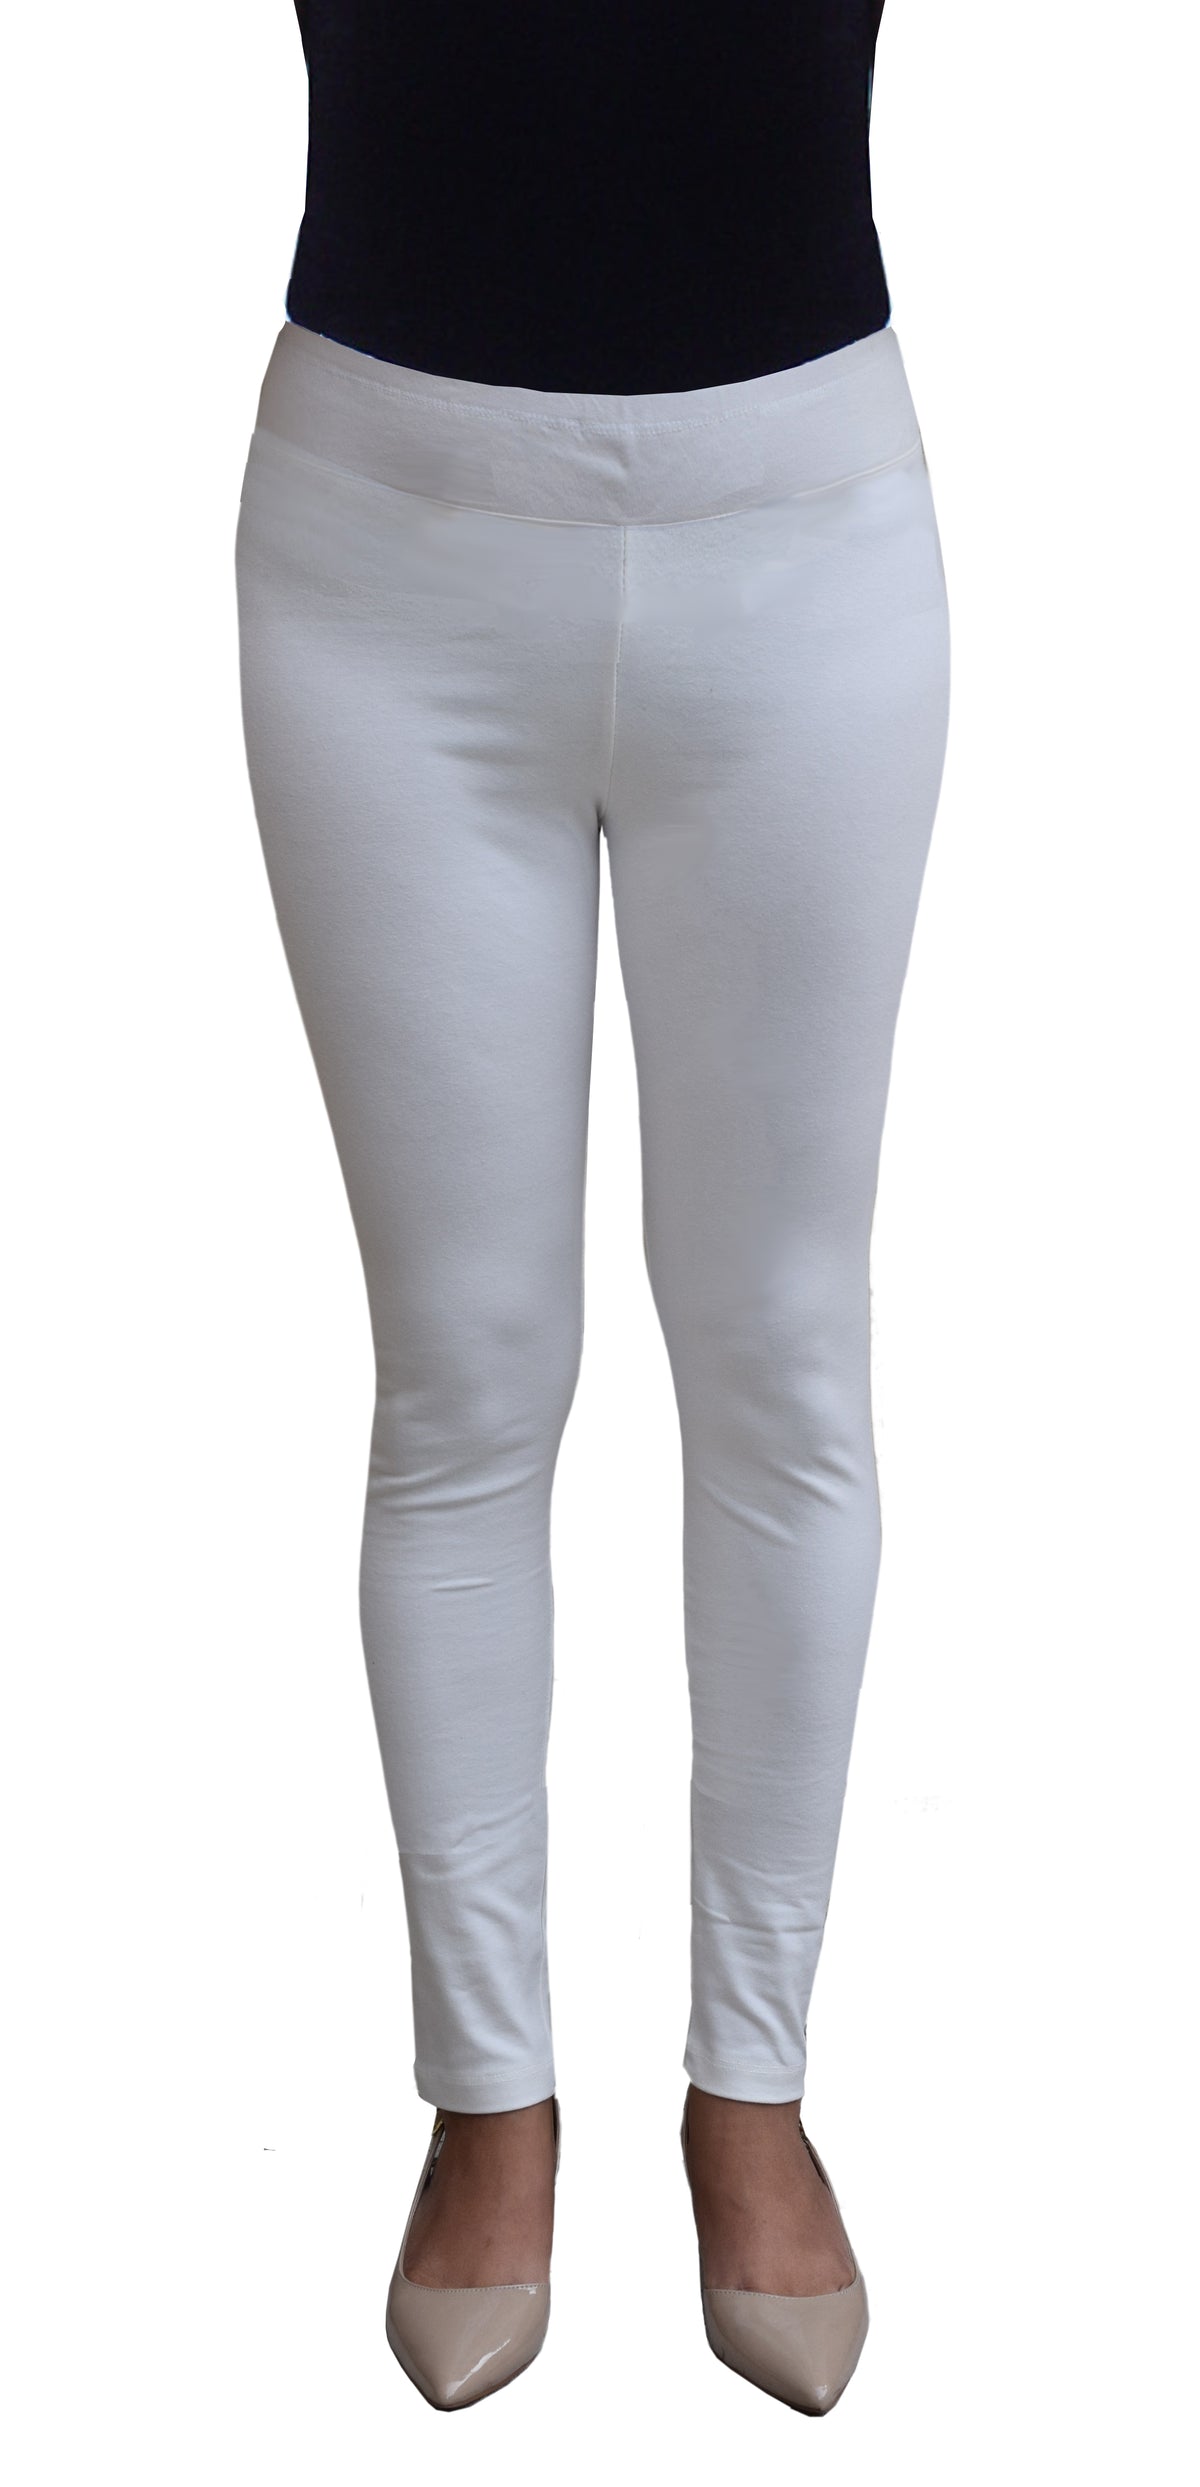 Cotton Spandex, Stretchable, 28in Inseam Regular Length Full Leggings